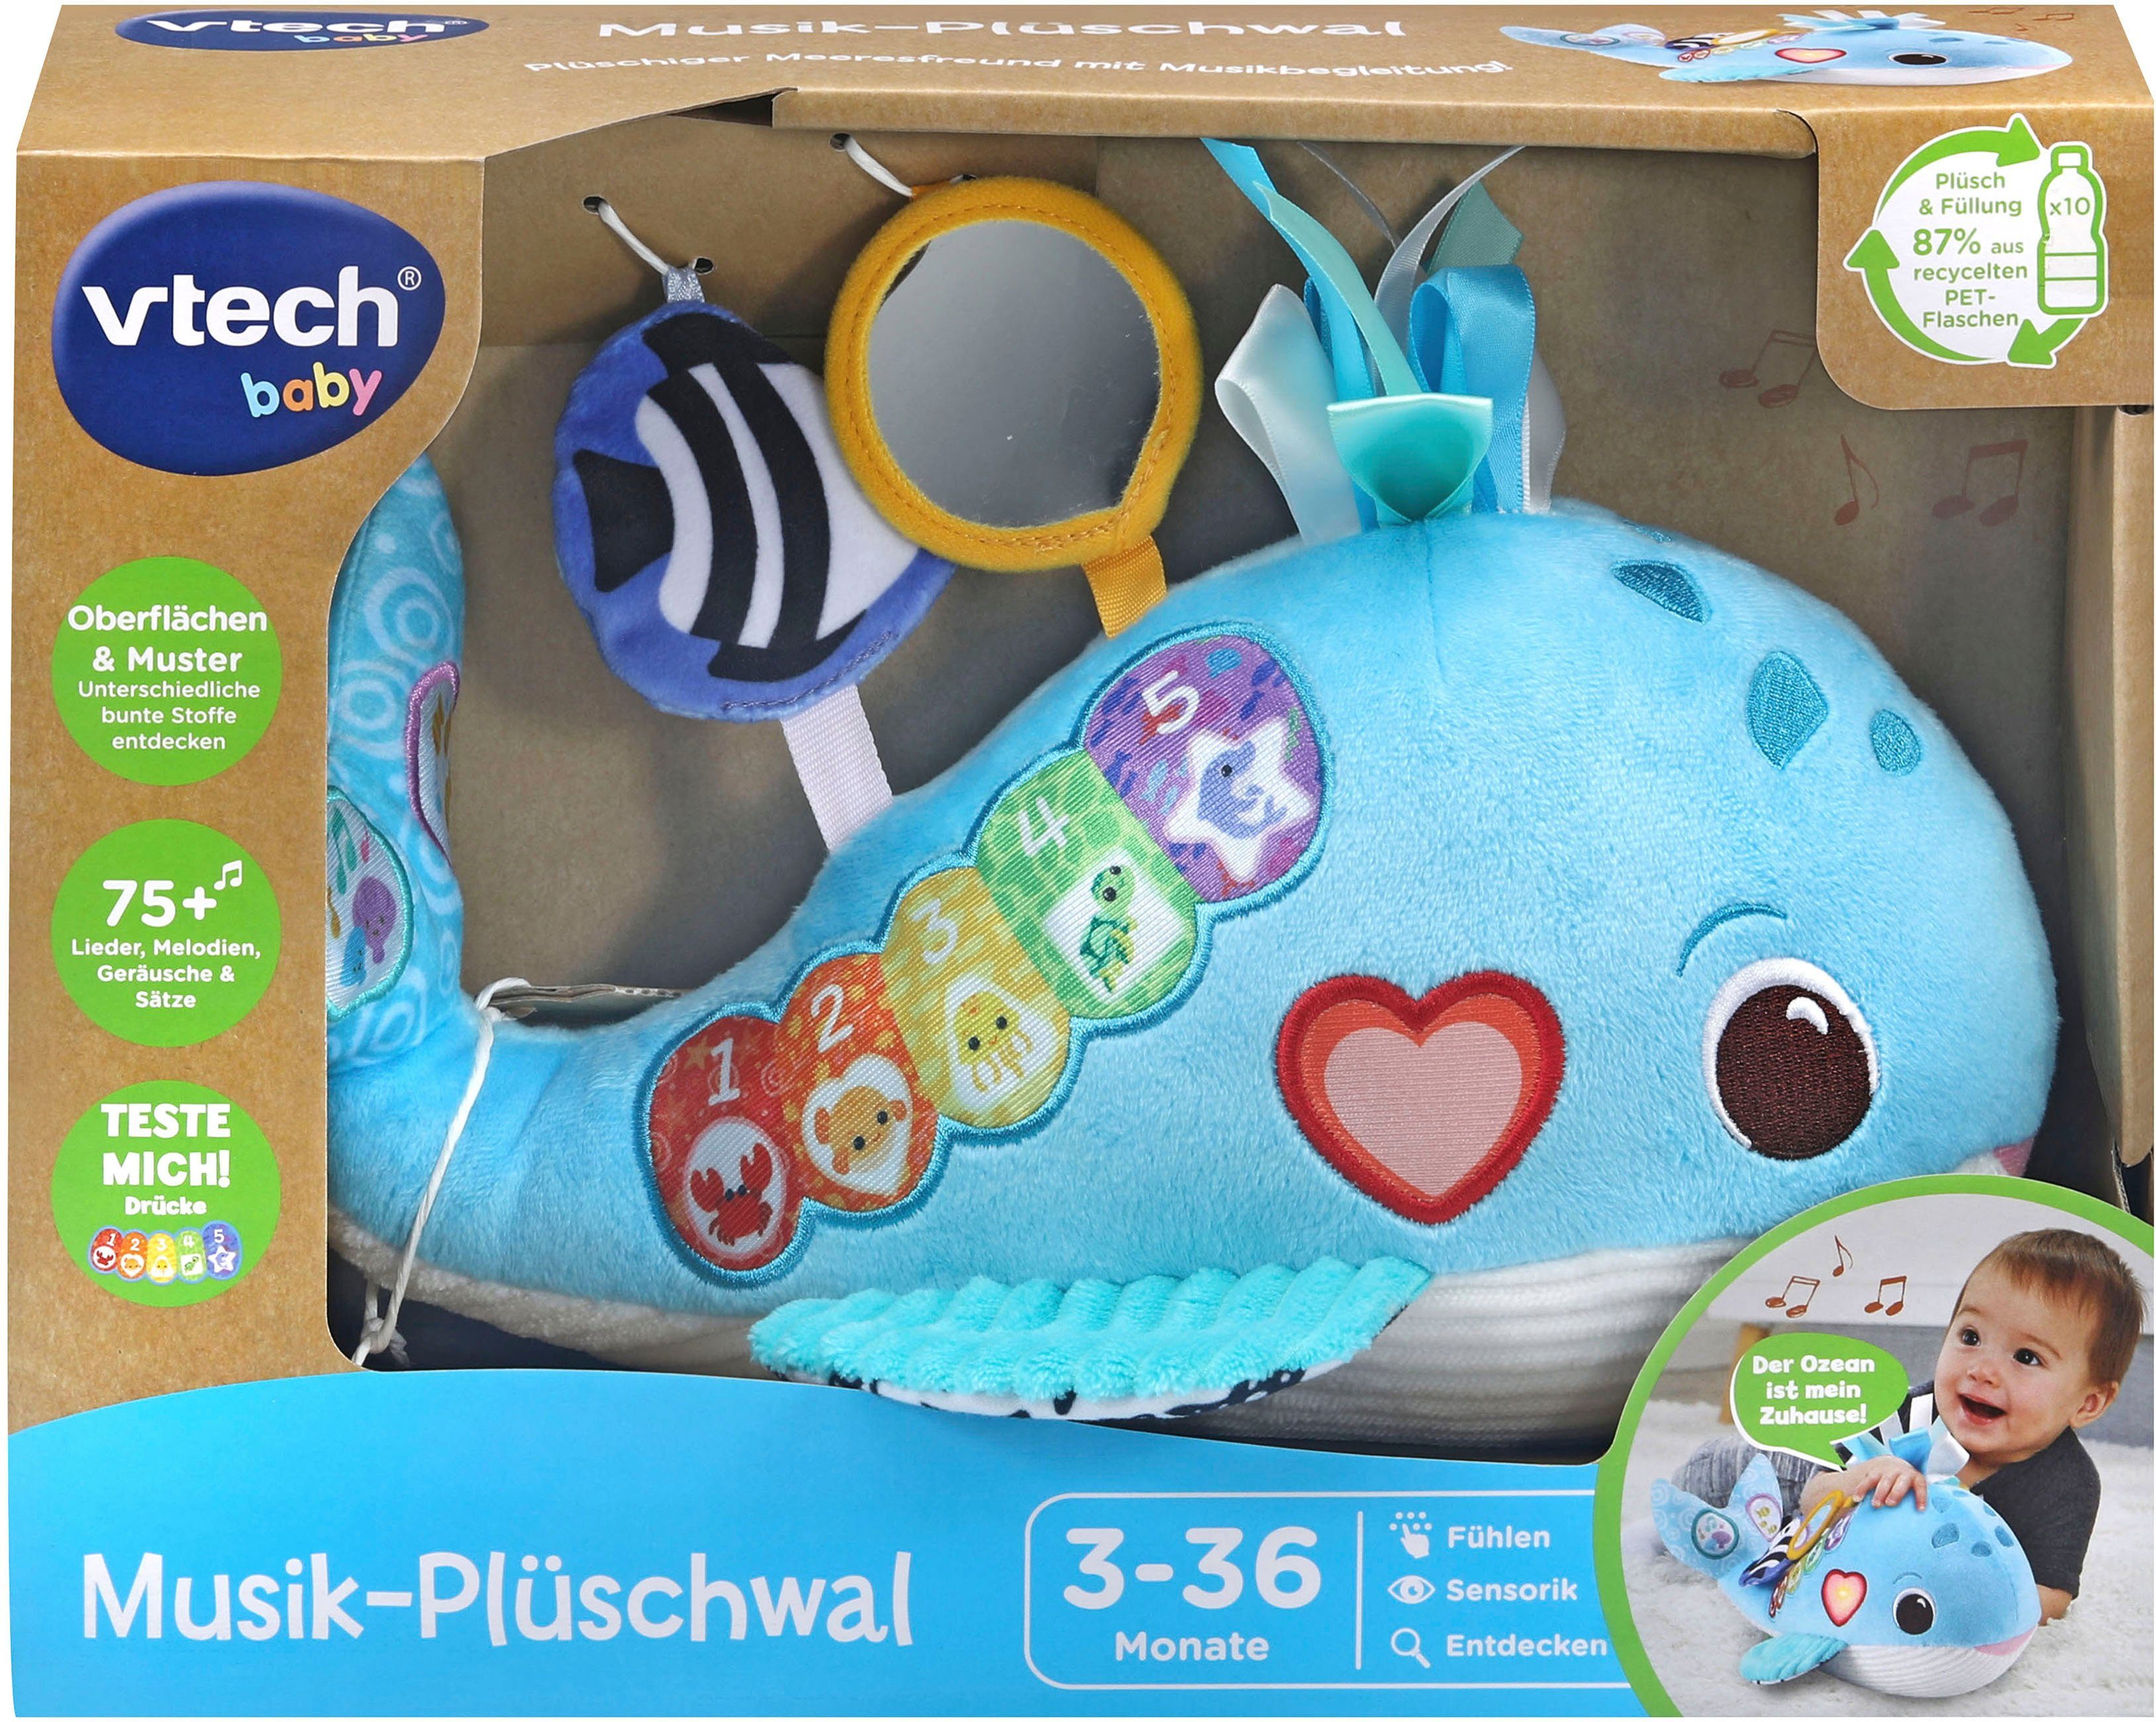 Vtech® Plüschfigur Vtech aus recyceltem Baby, Material Musik-Plüschwal